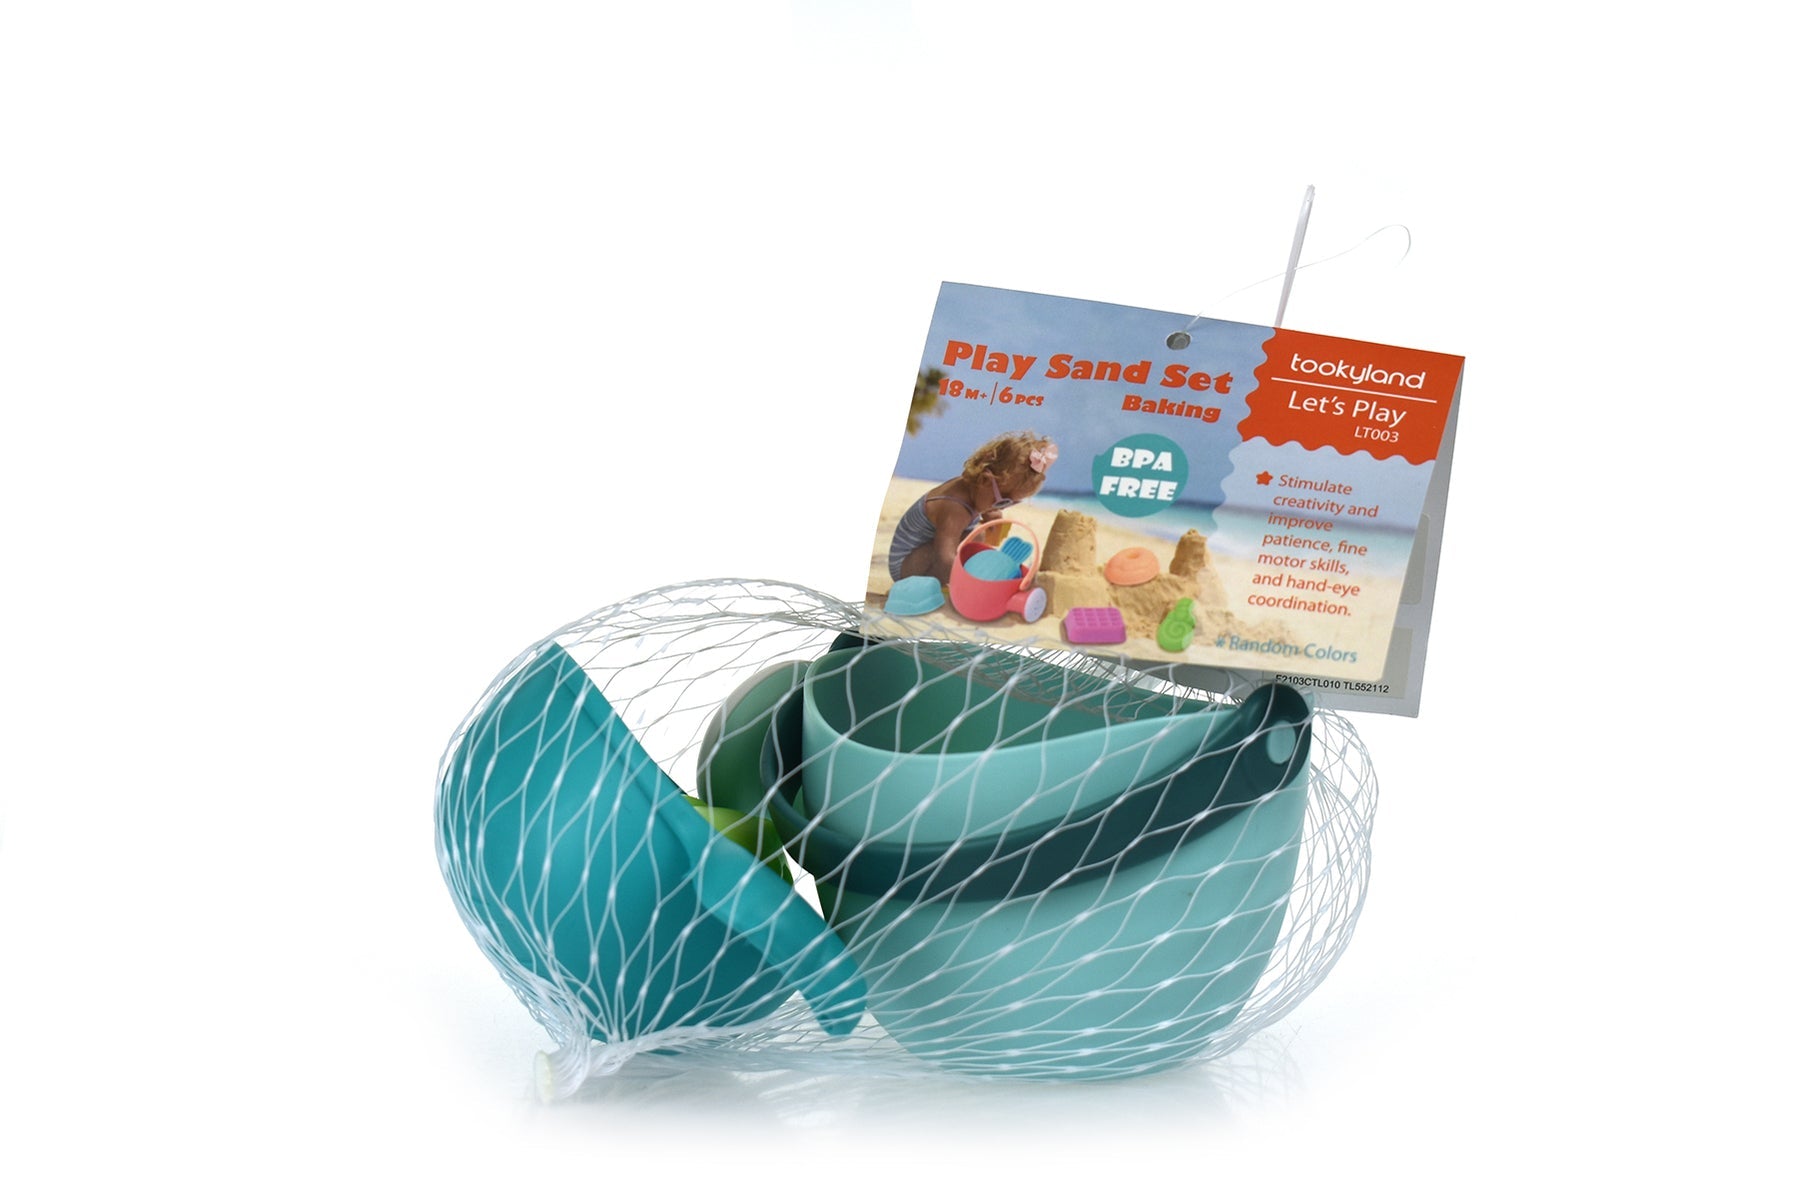 Packaging of Tookyland's Let's Play Beach Toy Baking Set